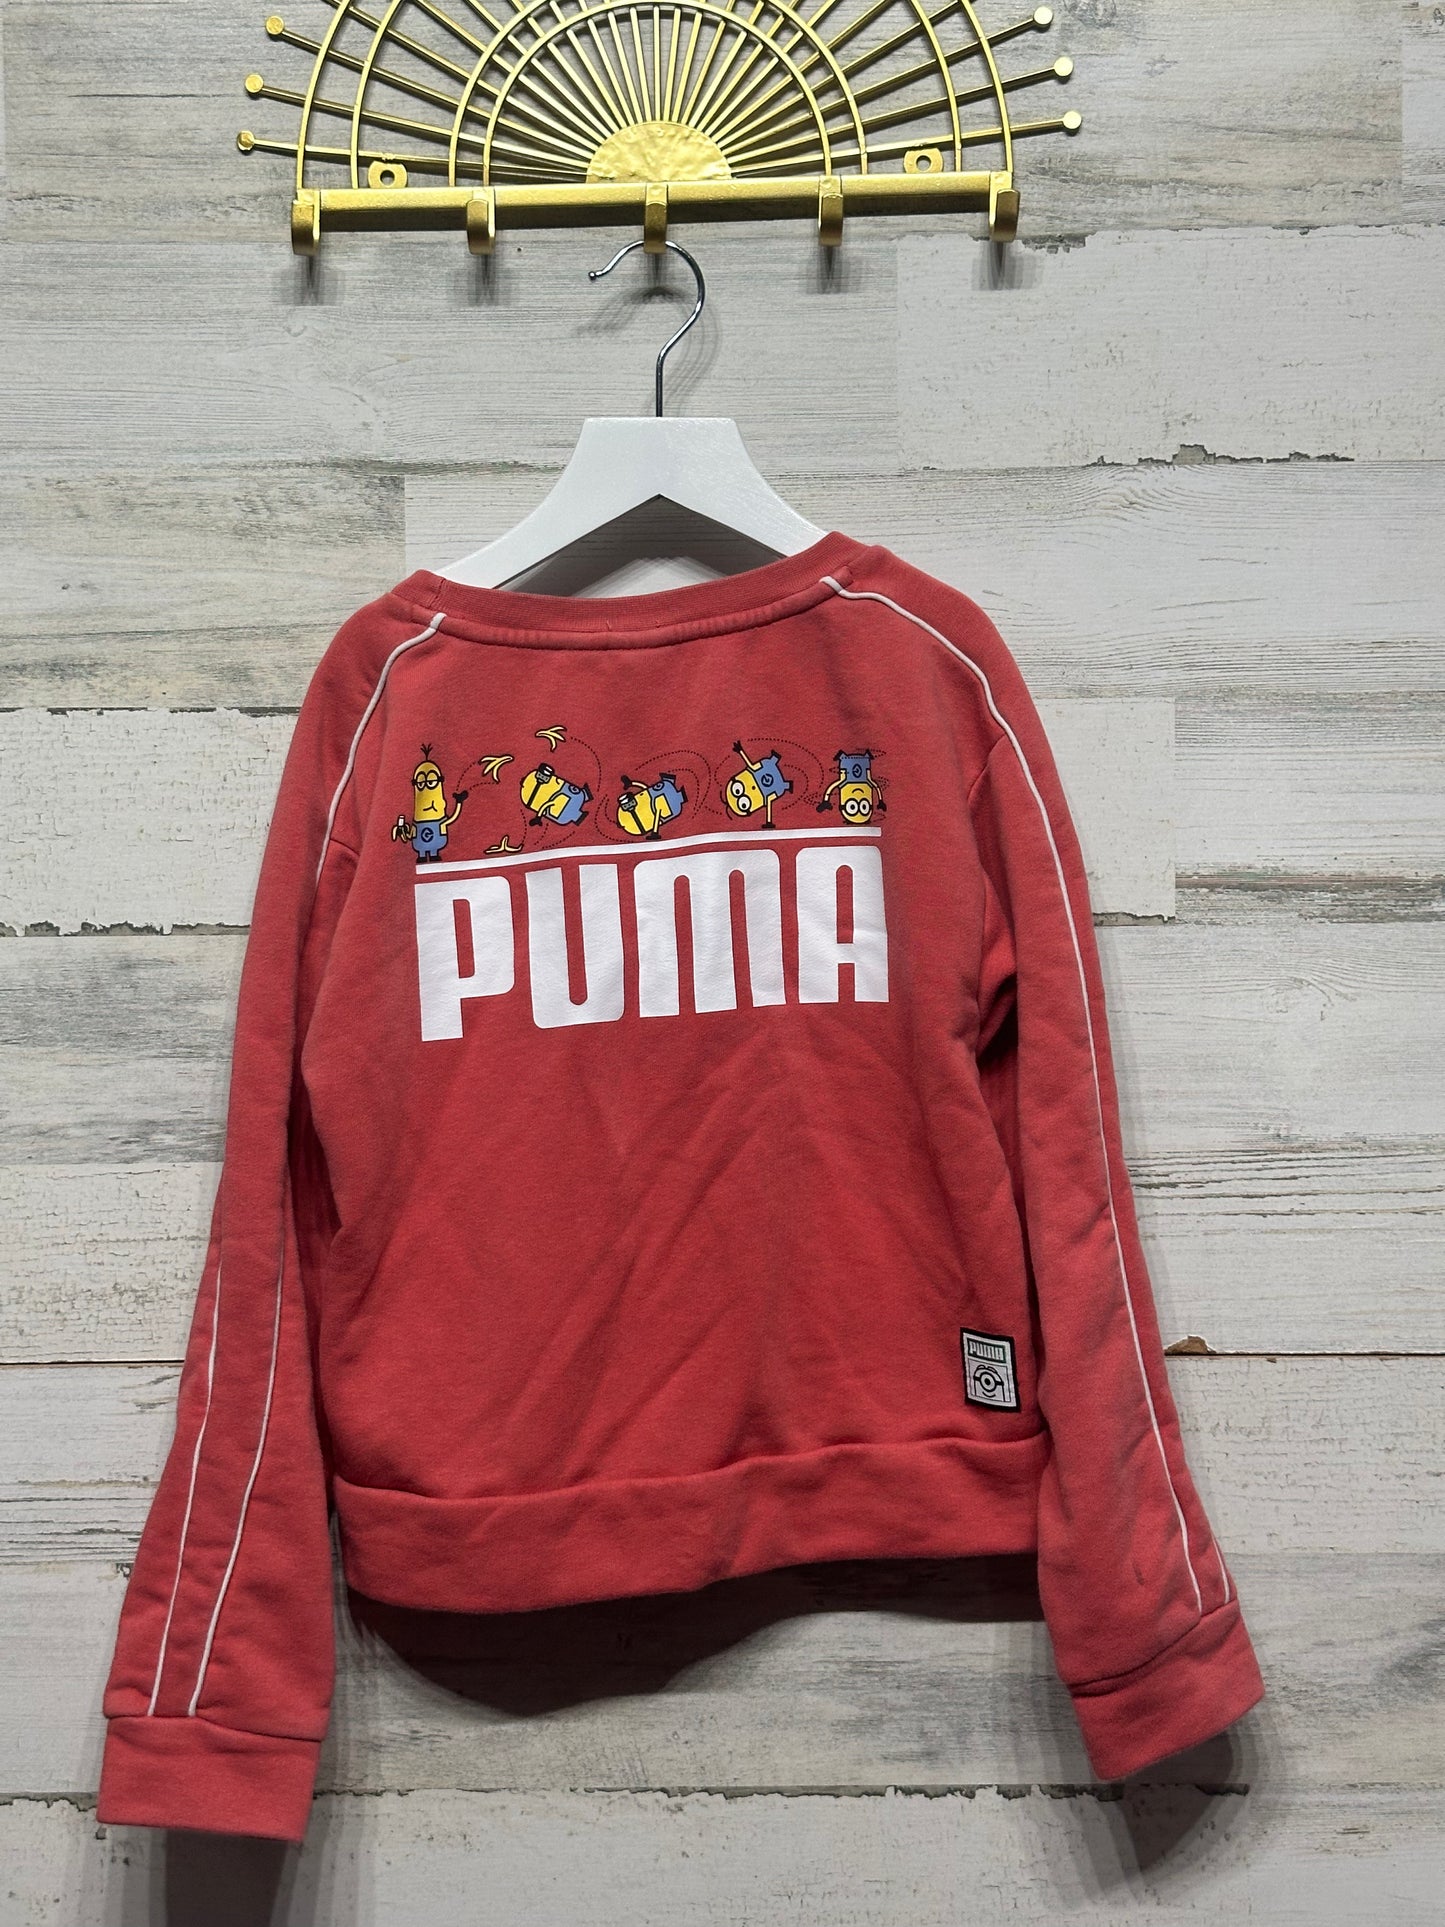 Girls Size Medium Puma Minions Sweatshirt - Very Good Used Condition